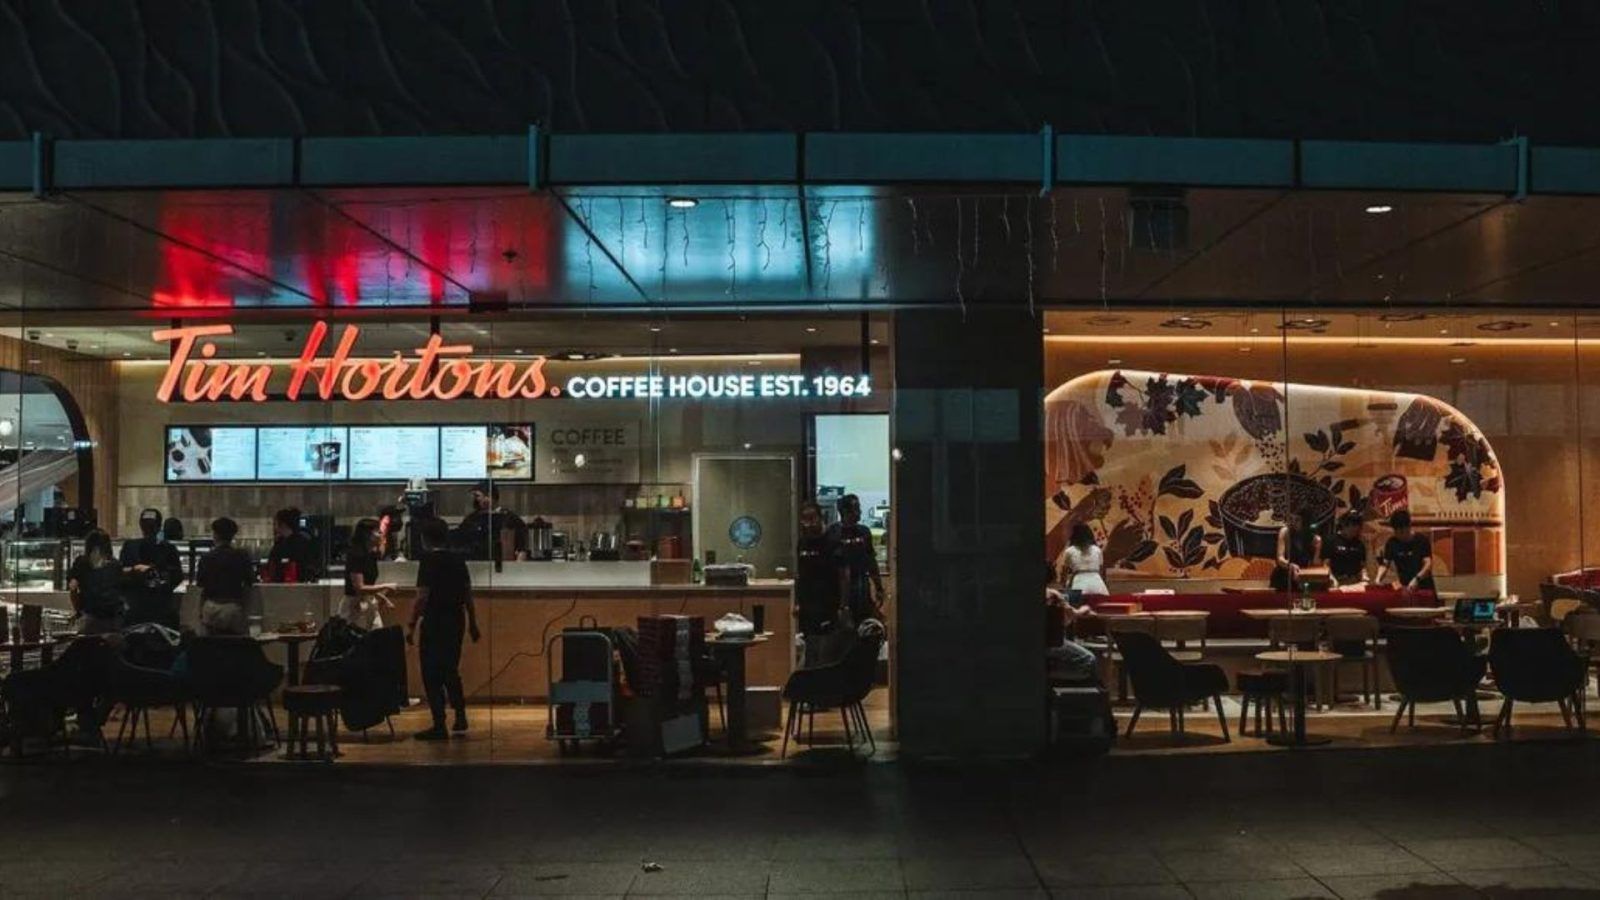 Tim Hortons, Cafe and Bake Shop - Picture of Tim Hortons, Dubai -  Tripadvisor